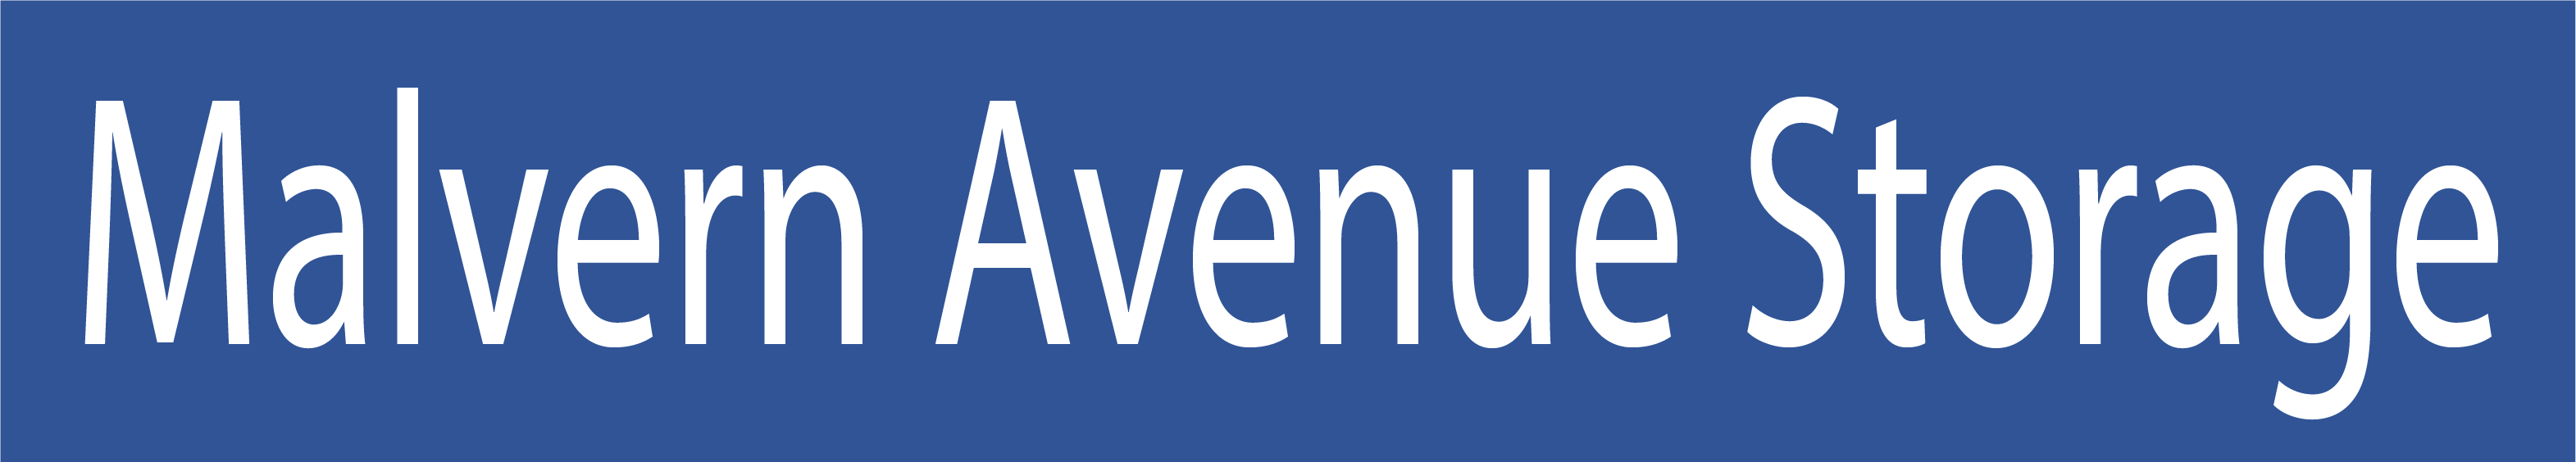 Malvern Avenue Storage Logo